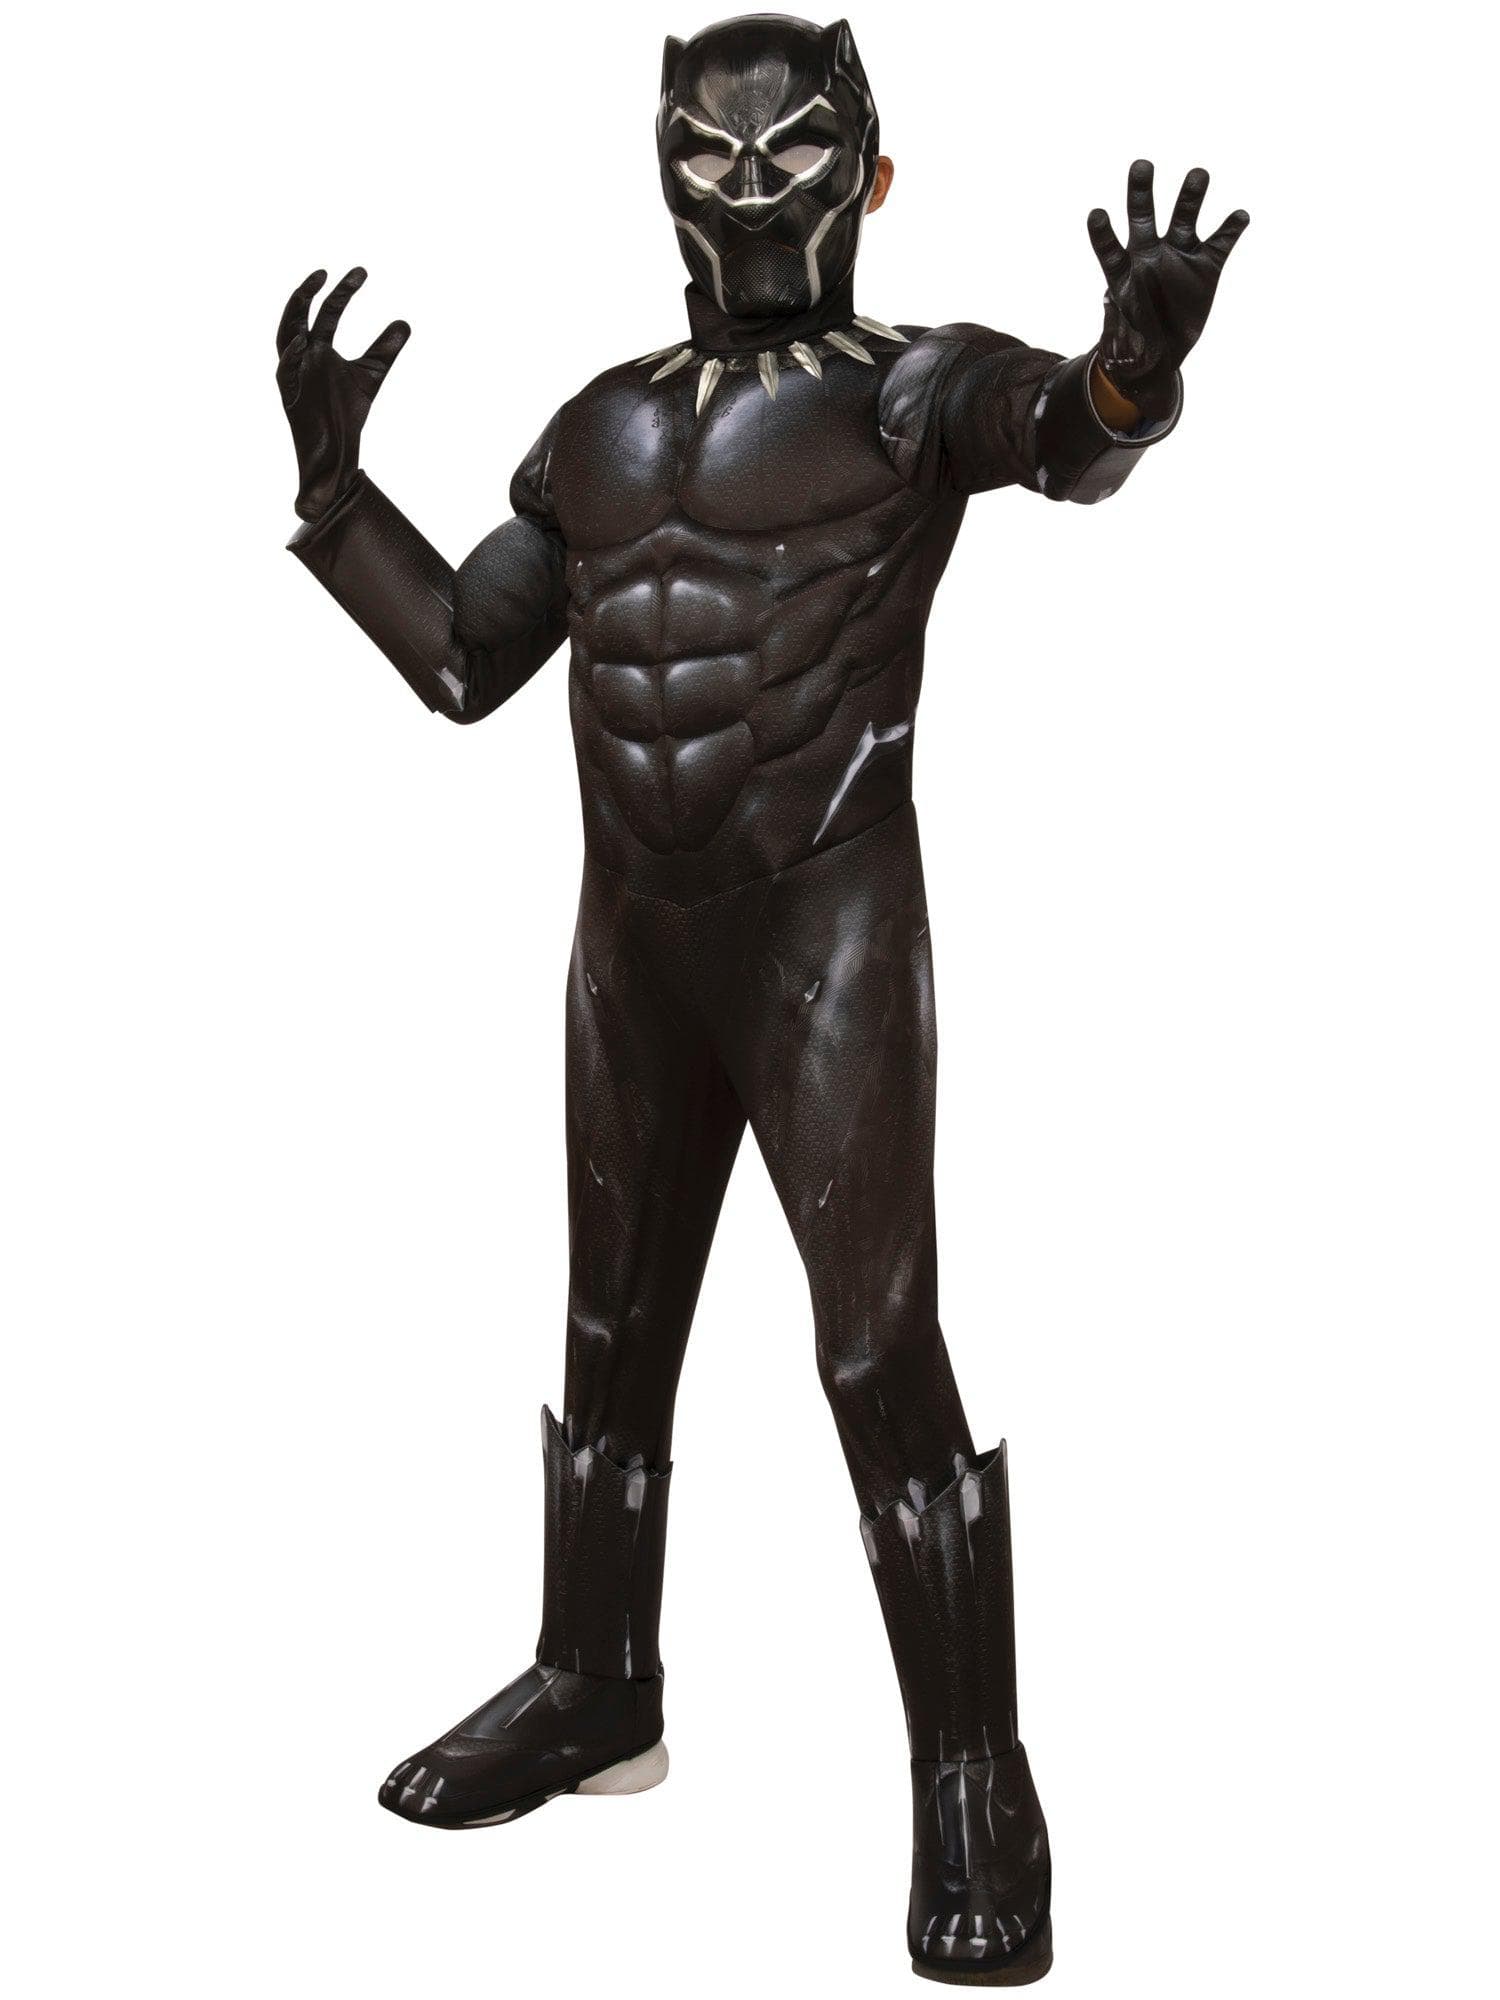 Black Panther Child Costume - costumes.com